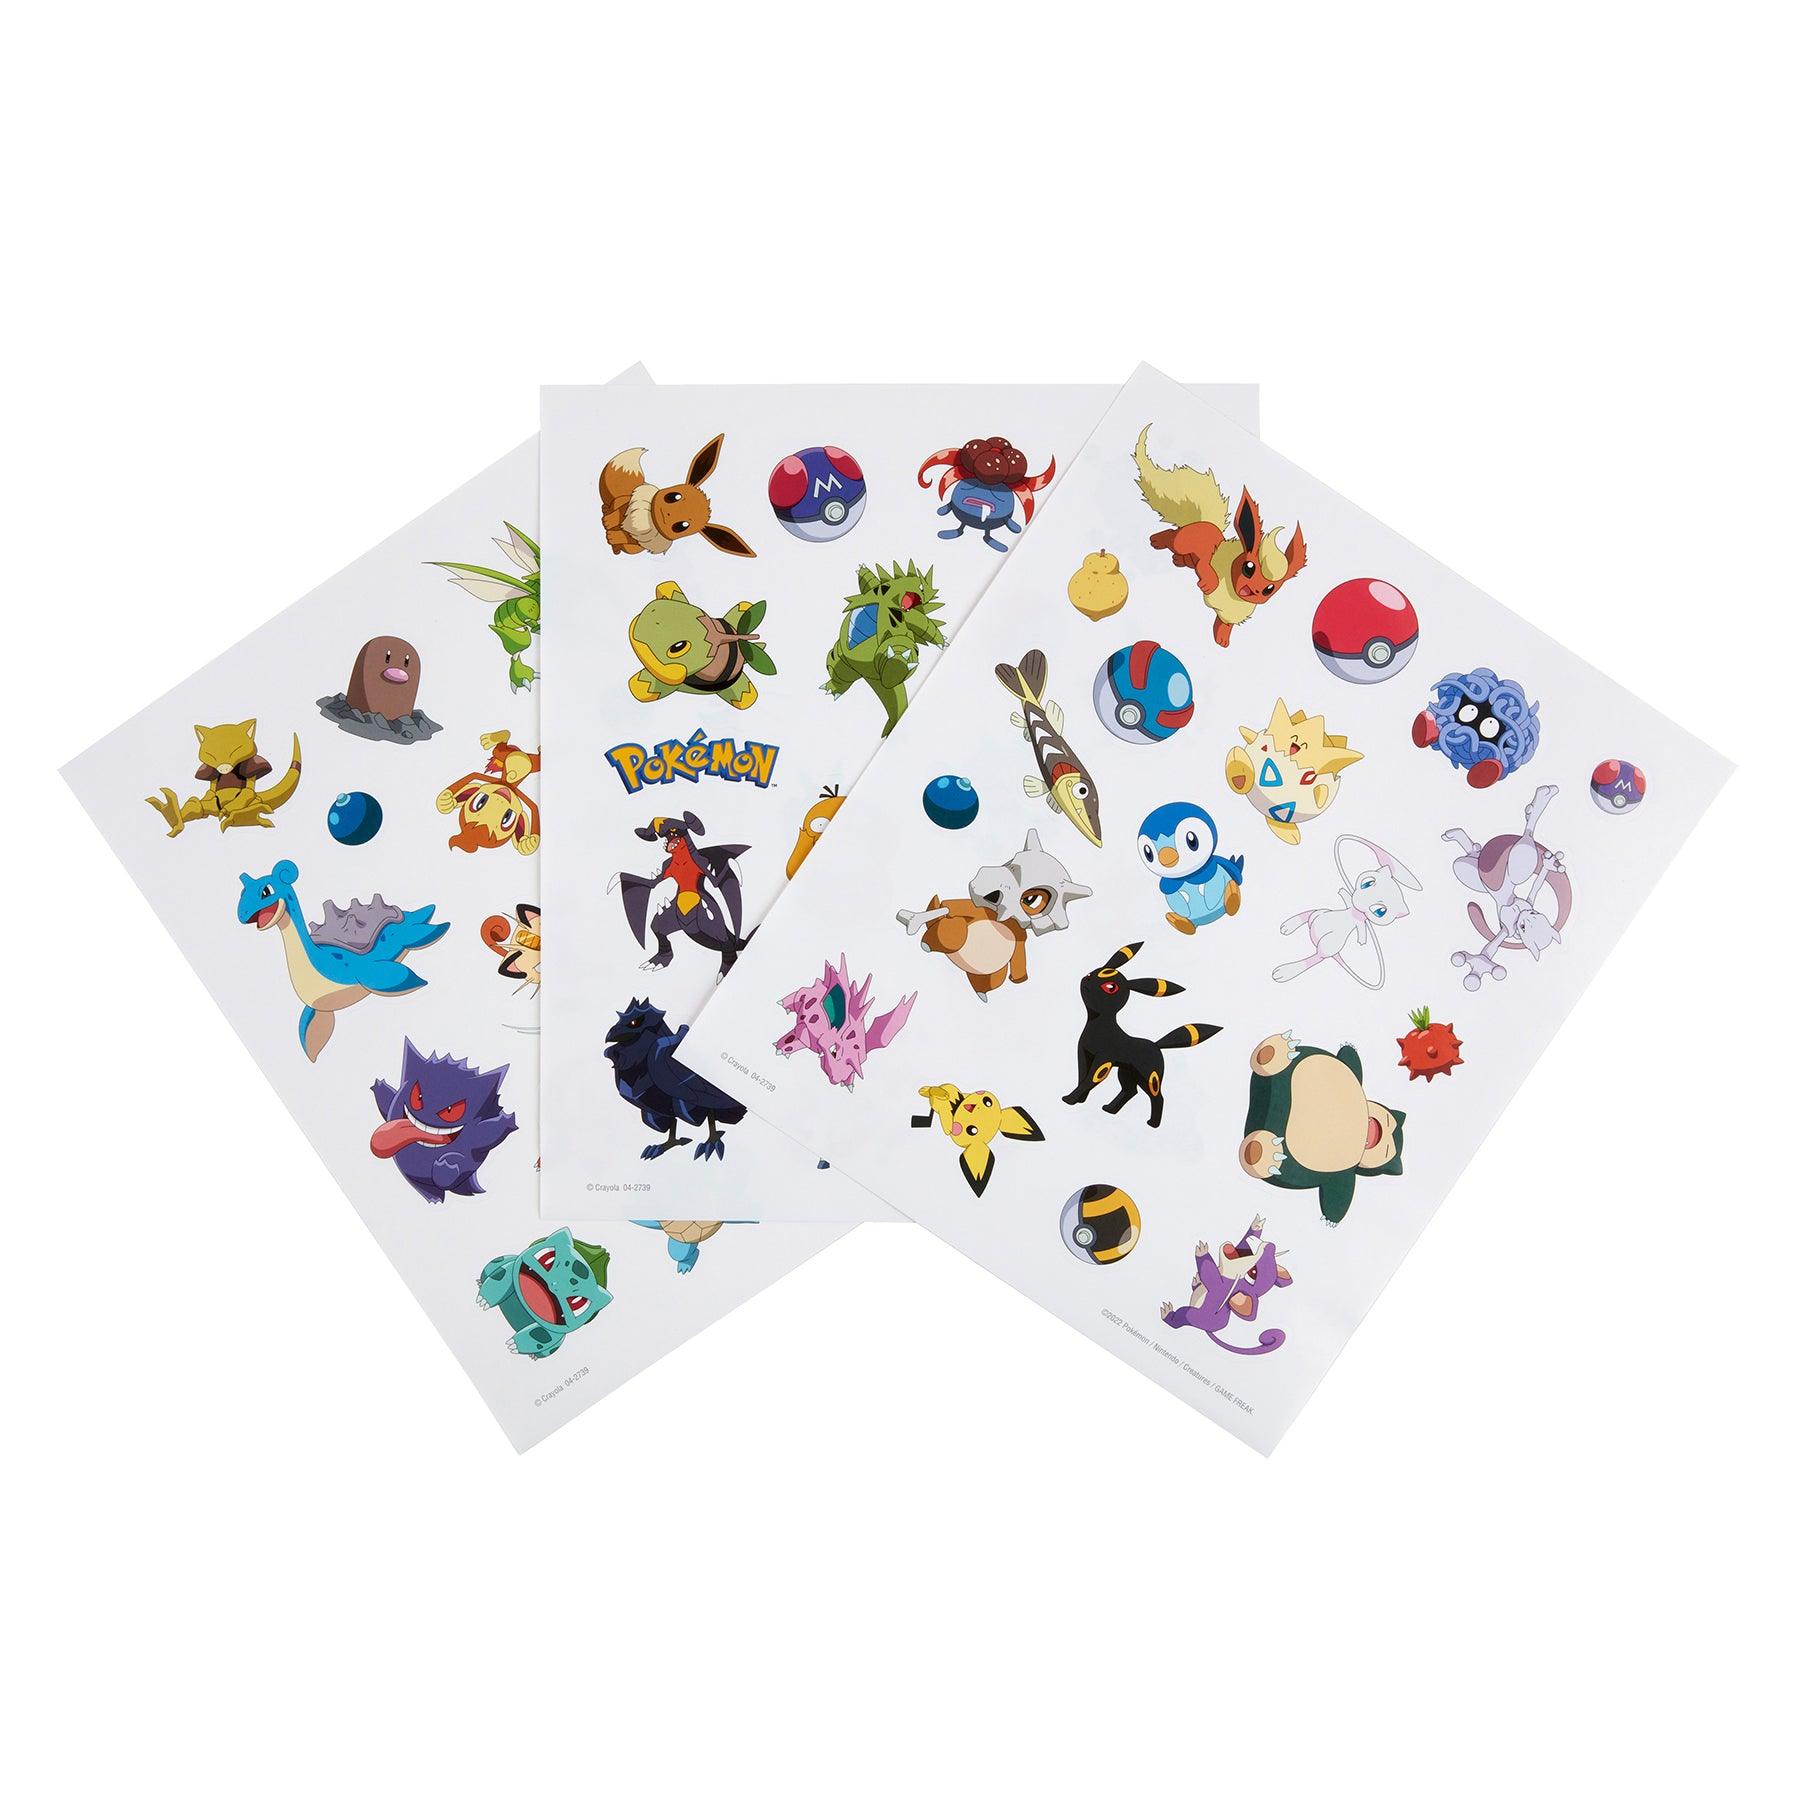 Color & Sticker Activity Set, Pokemon, 3 Sets - Loomini